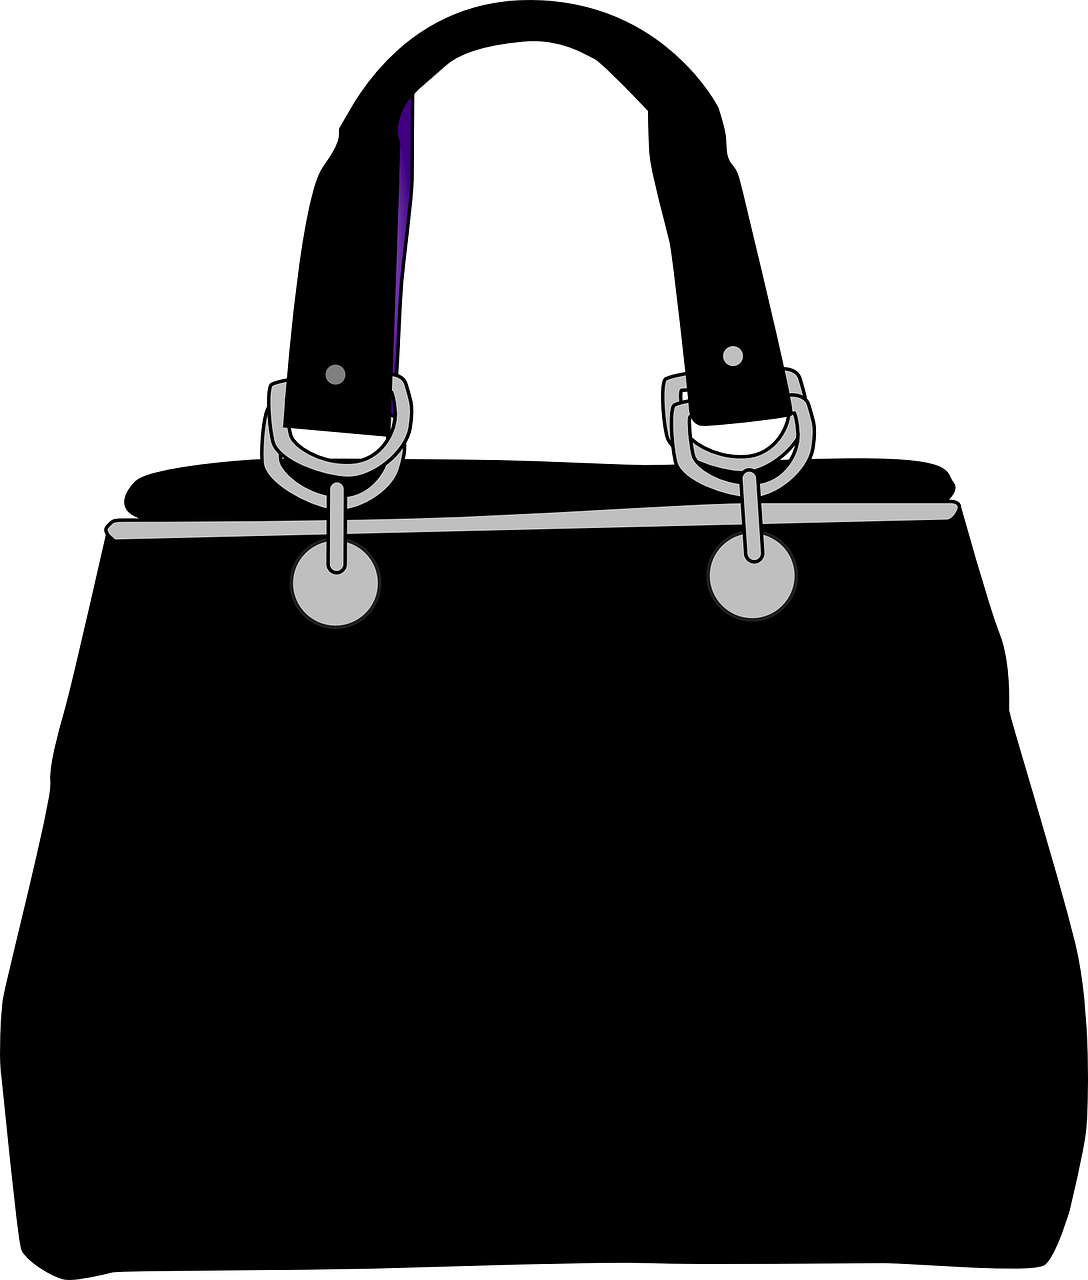 Modern Soft Leather Tote Bags: A Stylish Minimalist Choice